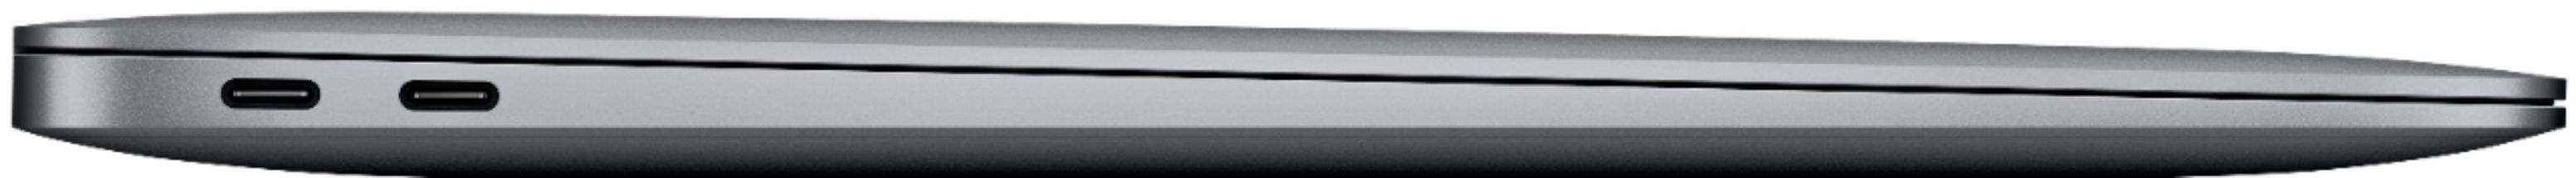 PC/タブレット ノートPC Best Buy: Apple MacBook Air 13.3